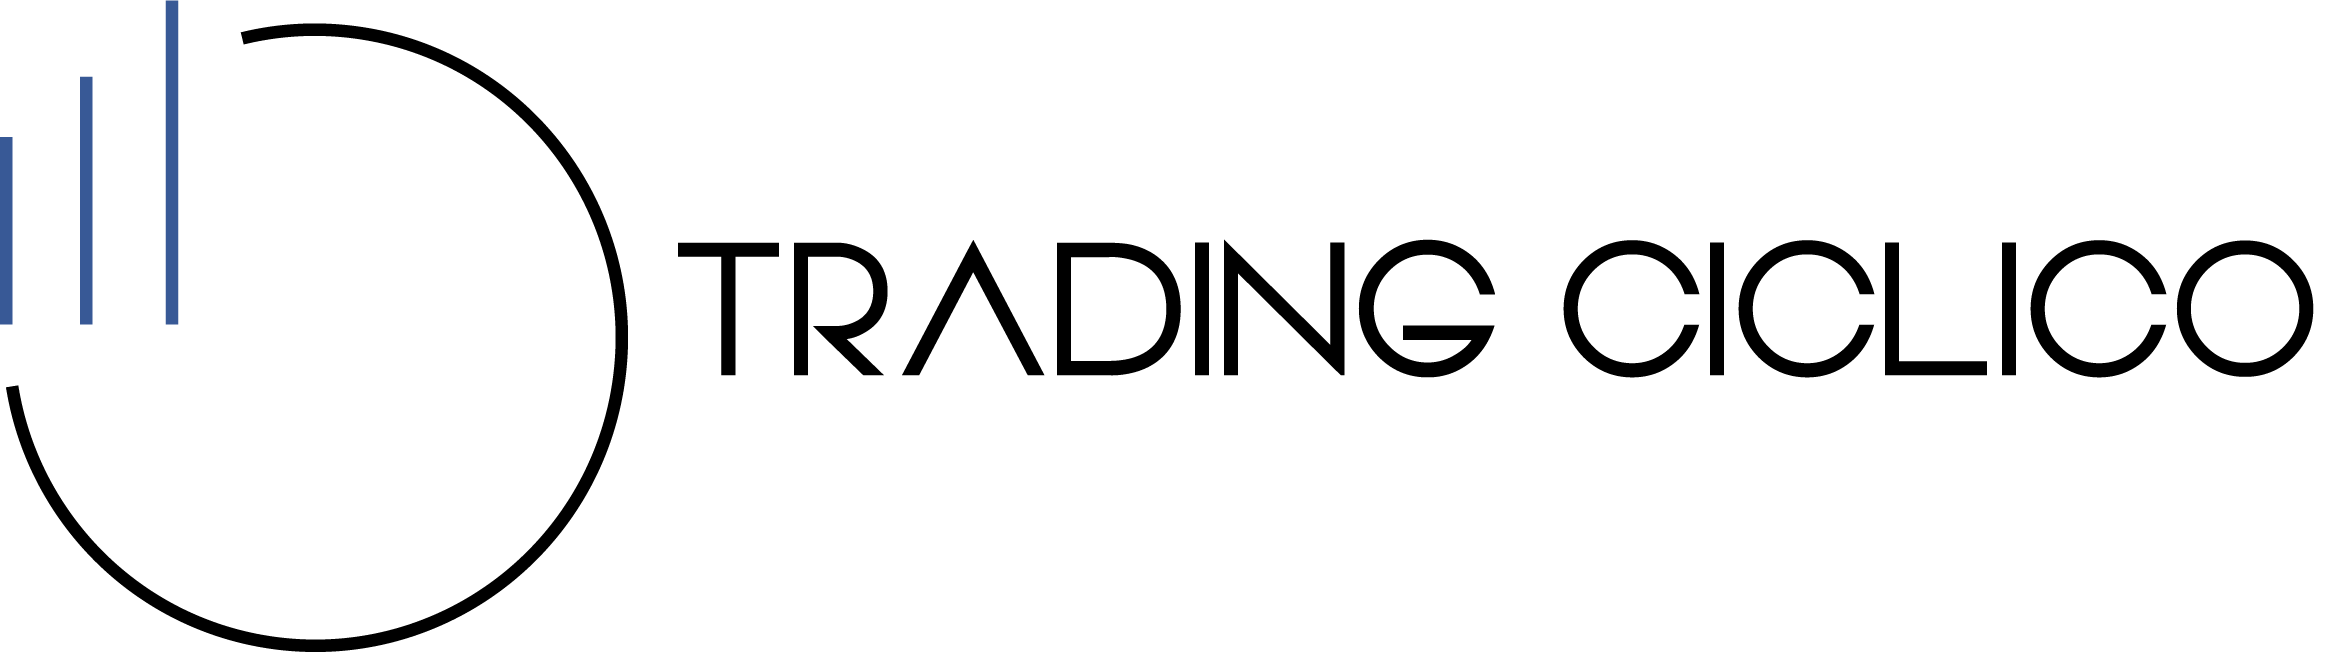 Trading Ciclico Logo Bianco